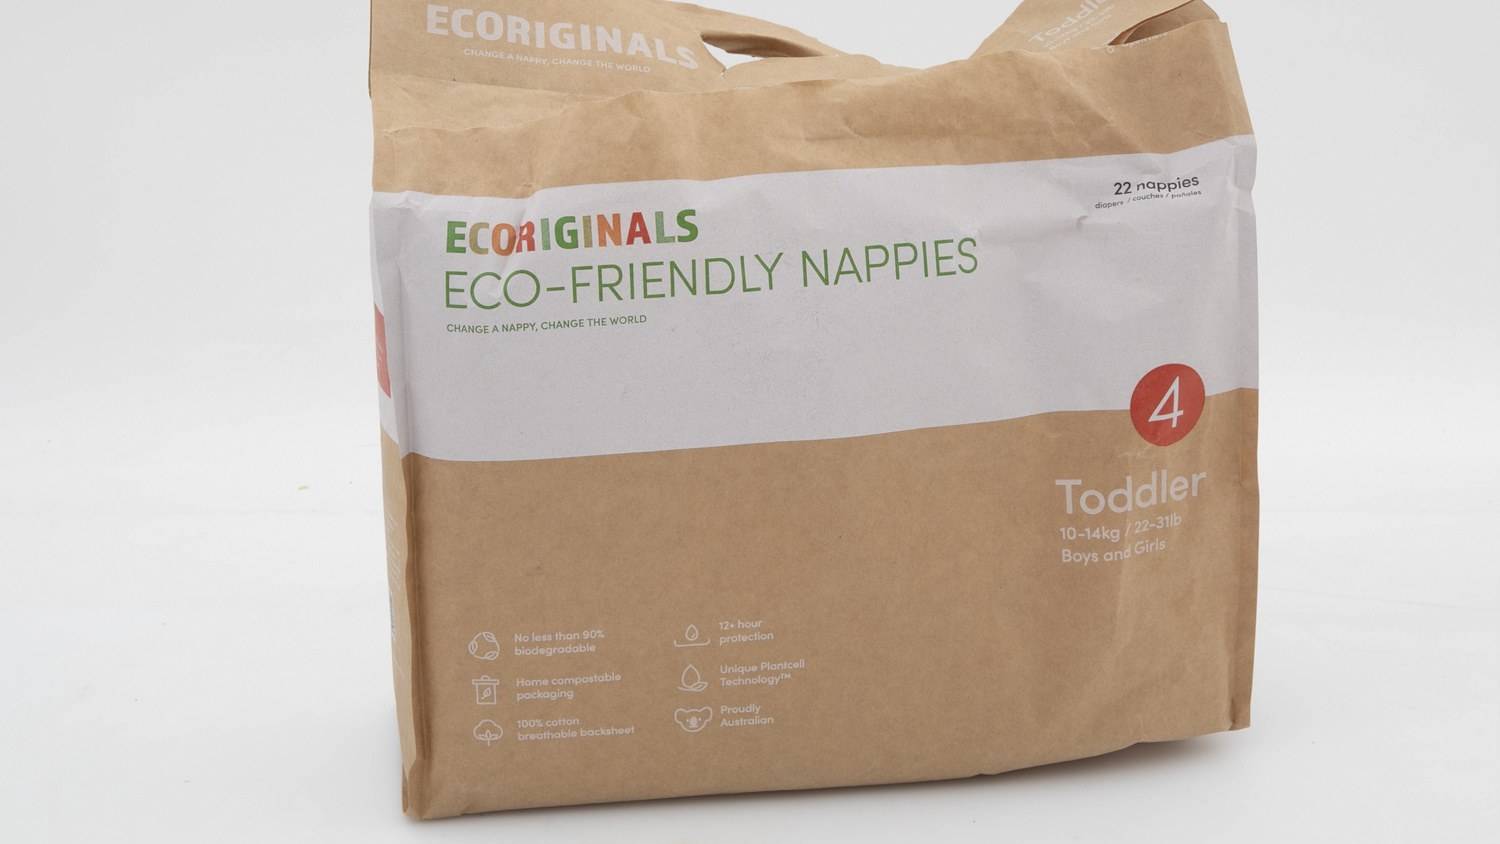 Ecoriginals Eco-friendly Nappies Toddler Size 4 carousel image